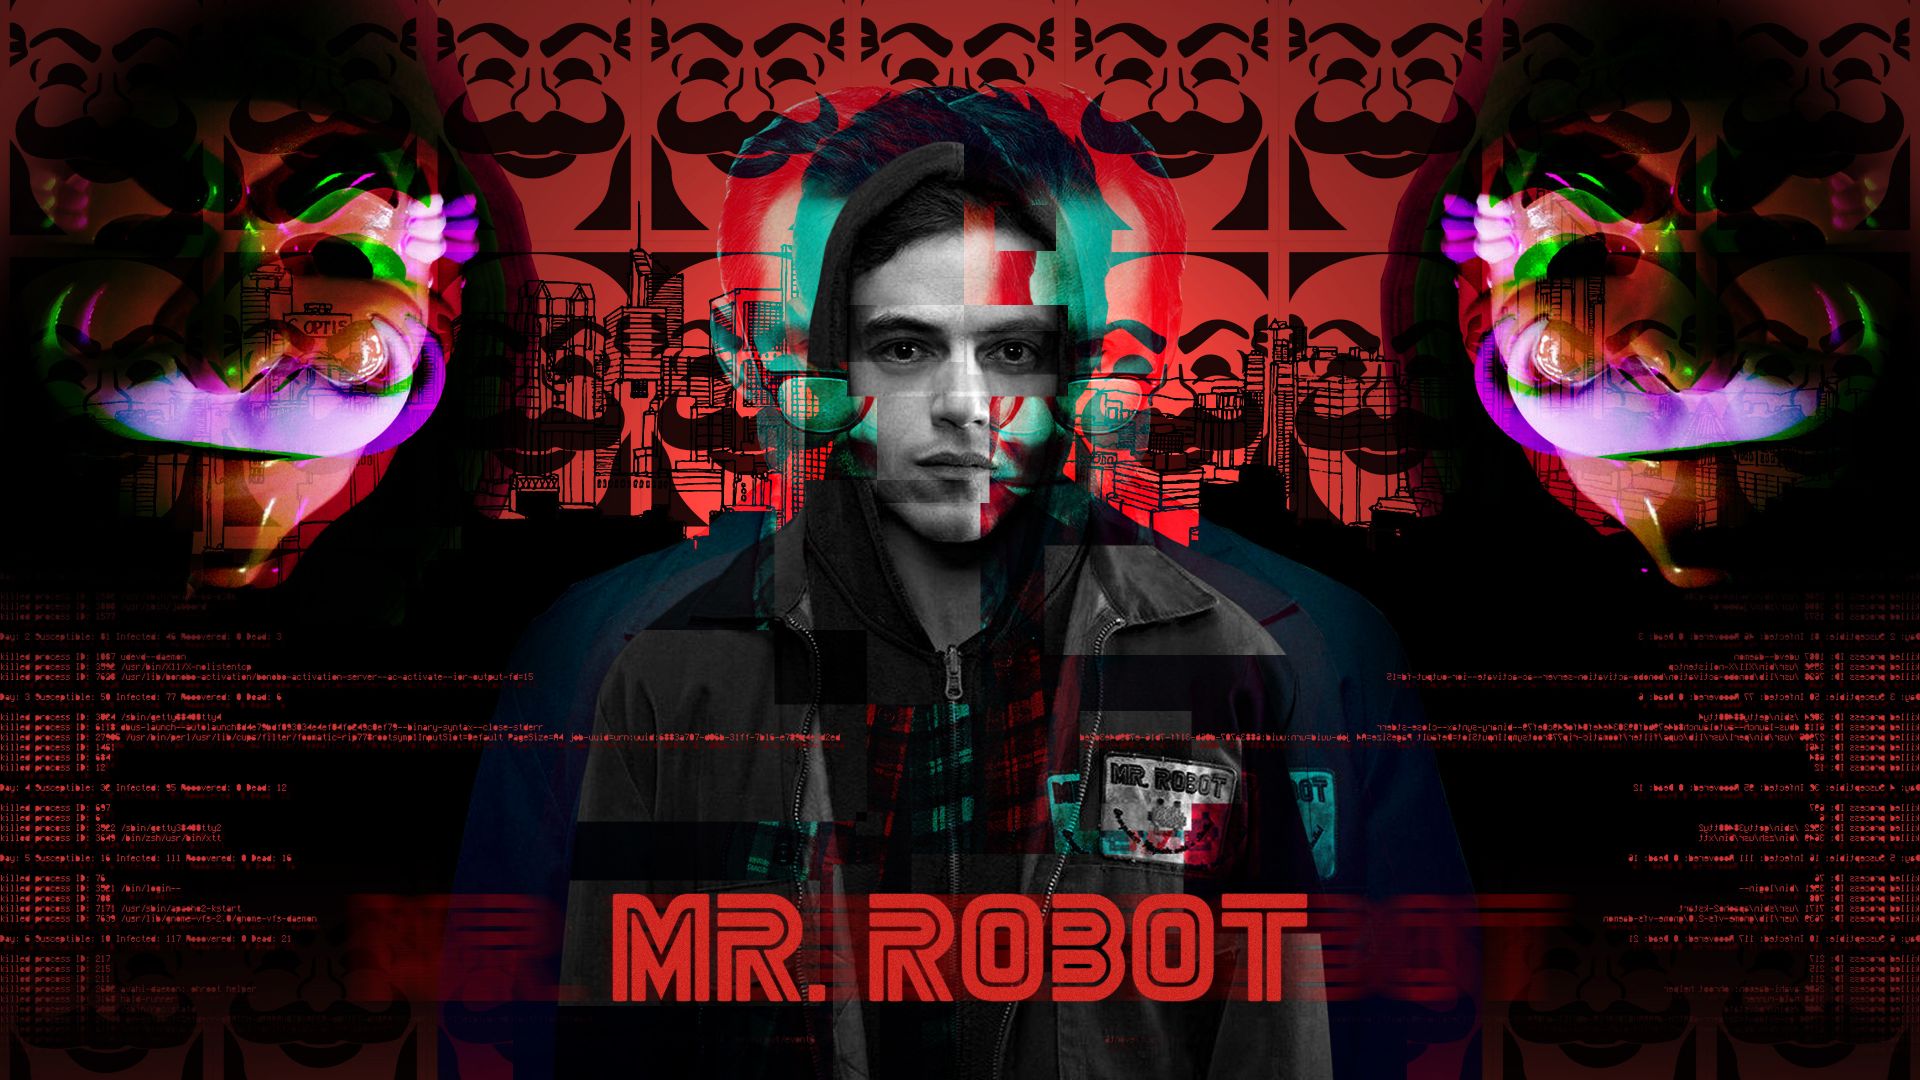 Wallpaper Mr. robot, tv series, glitch art, 4k